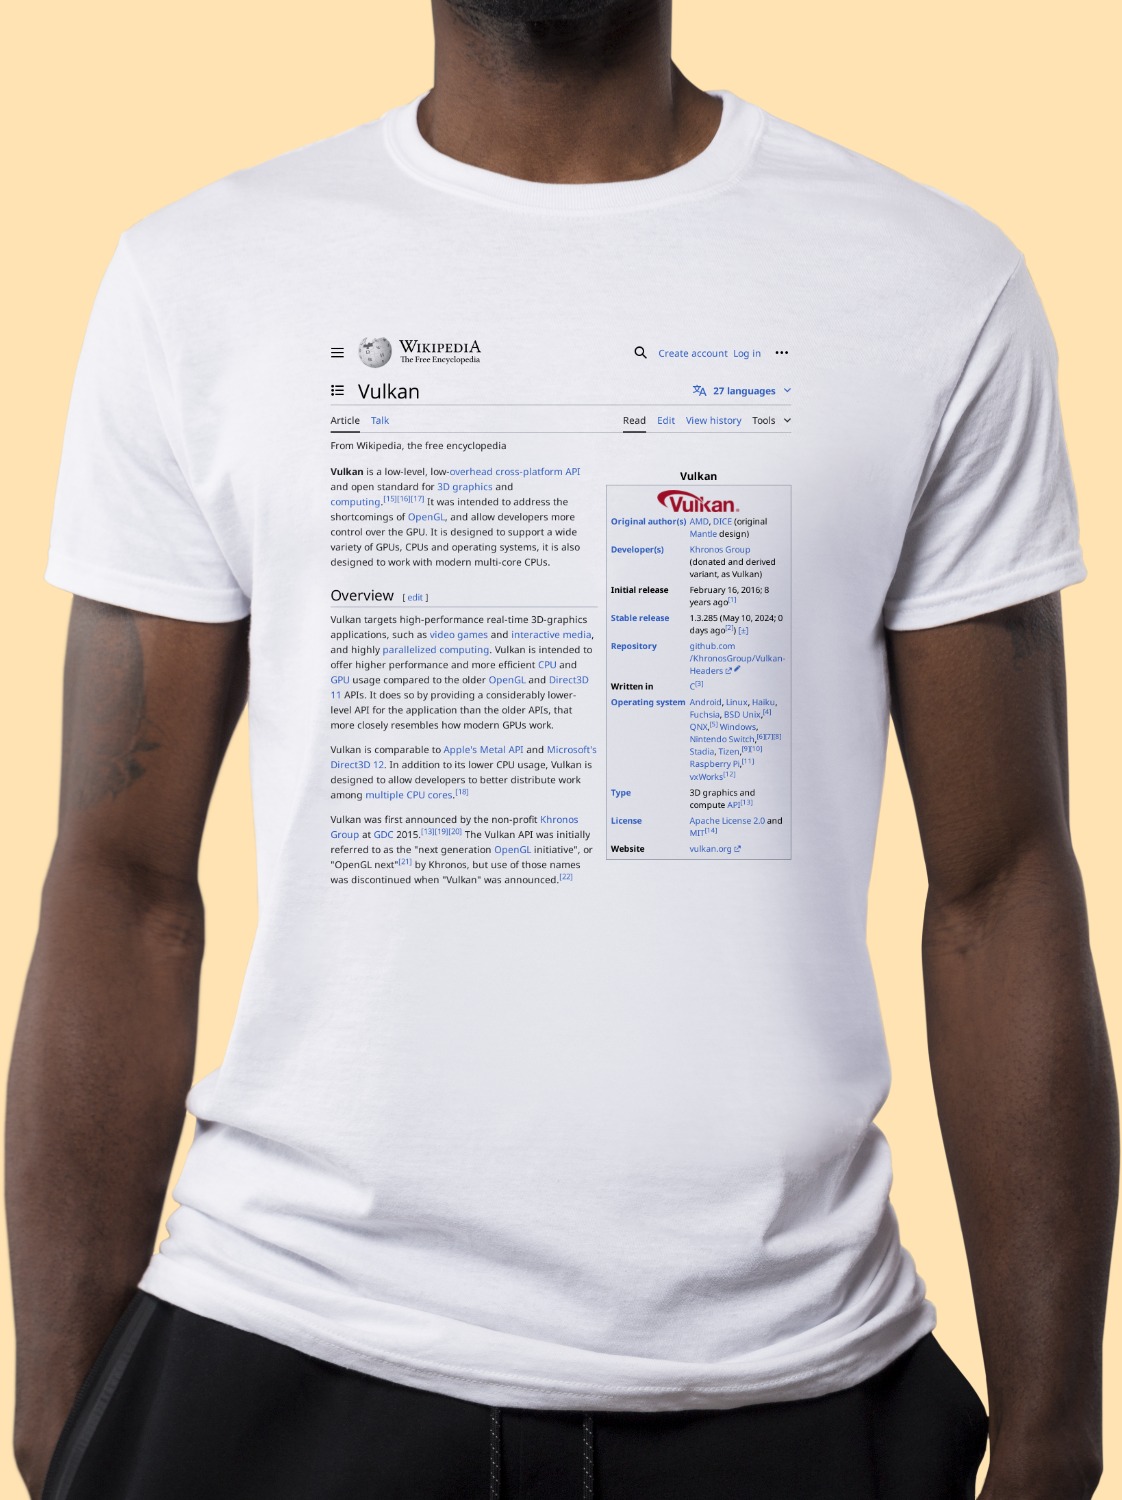 Vulkan_(API) Wikipedia Shirt